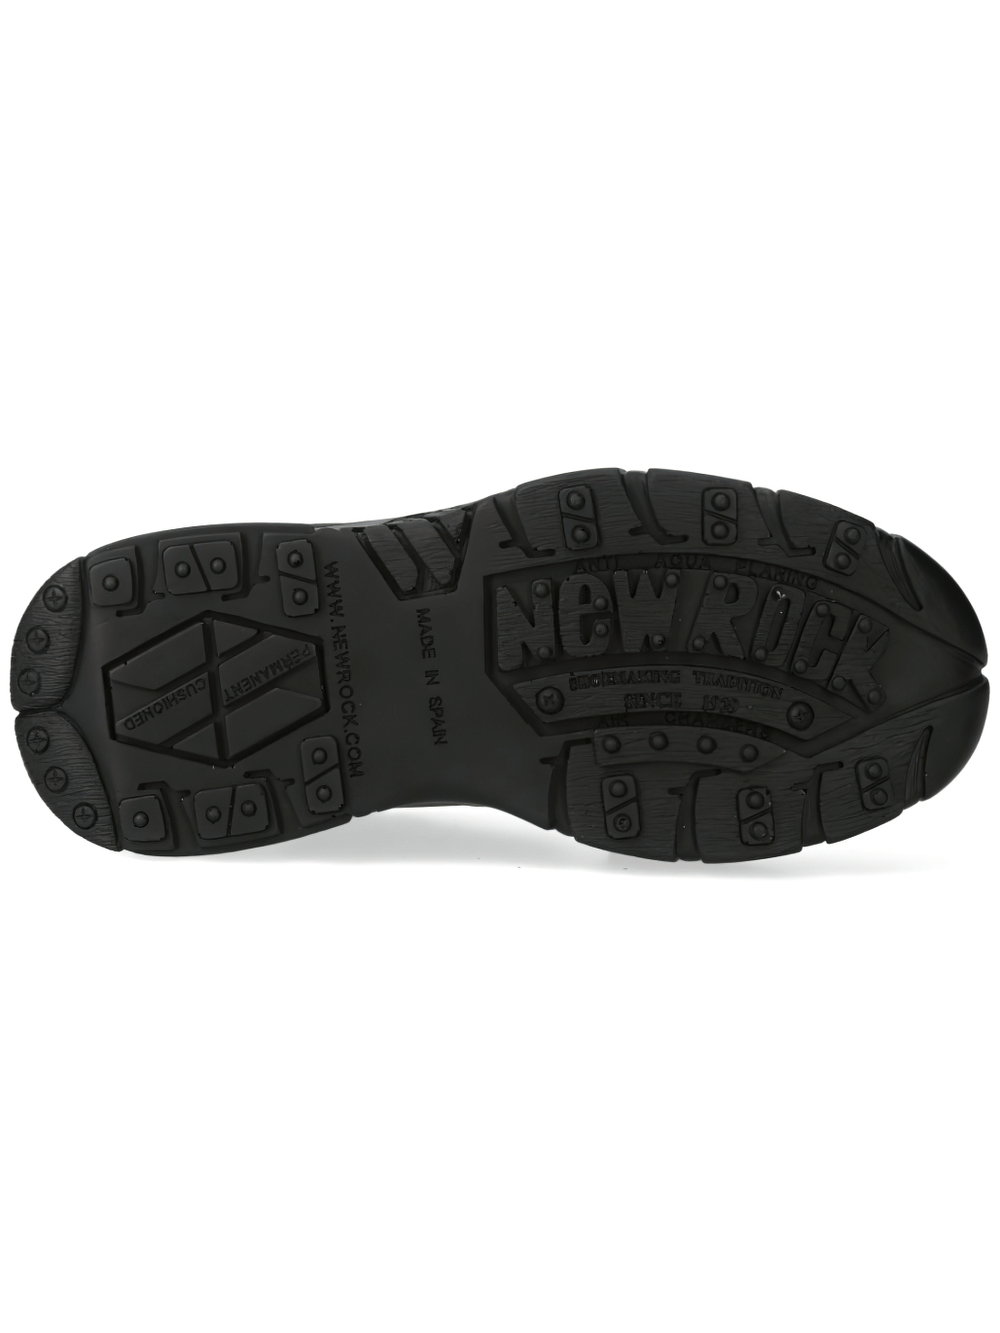 NEW ROCK Black Synthetic Straps Sandals for Men